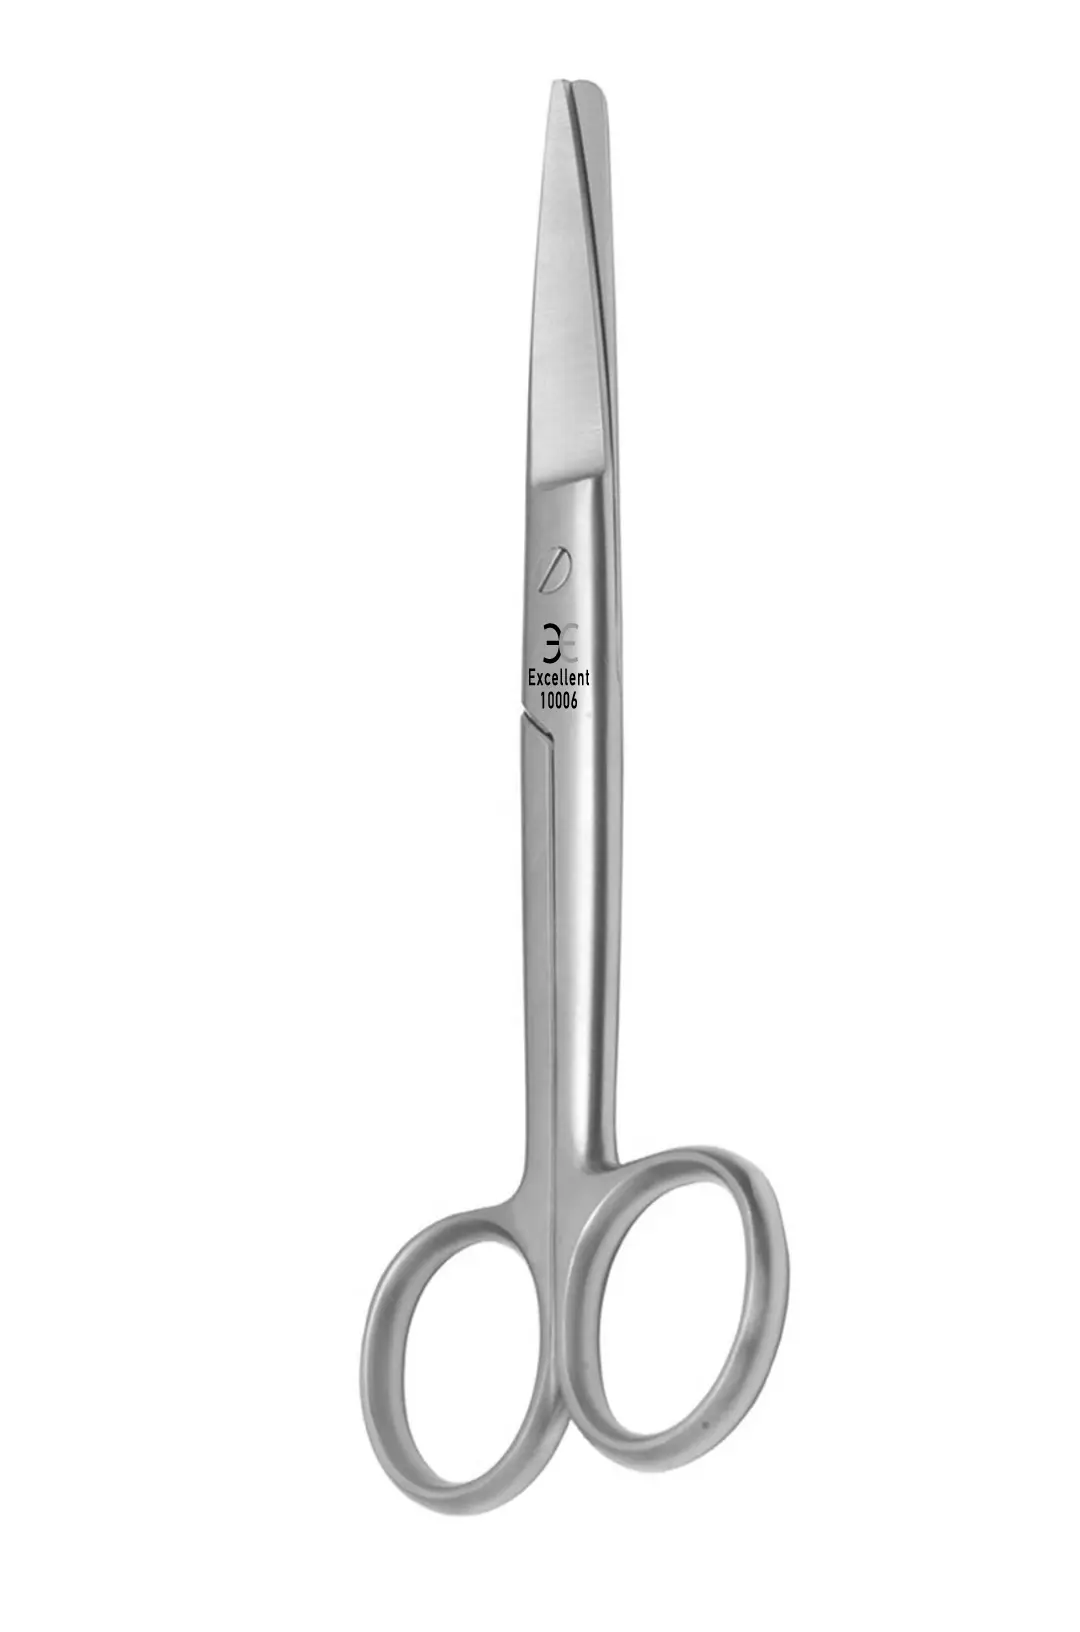 Excellent bandage scissors 14 cm, pointed cutting edge